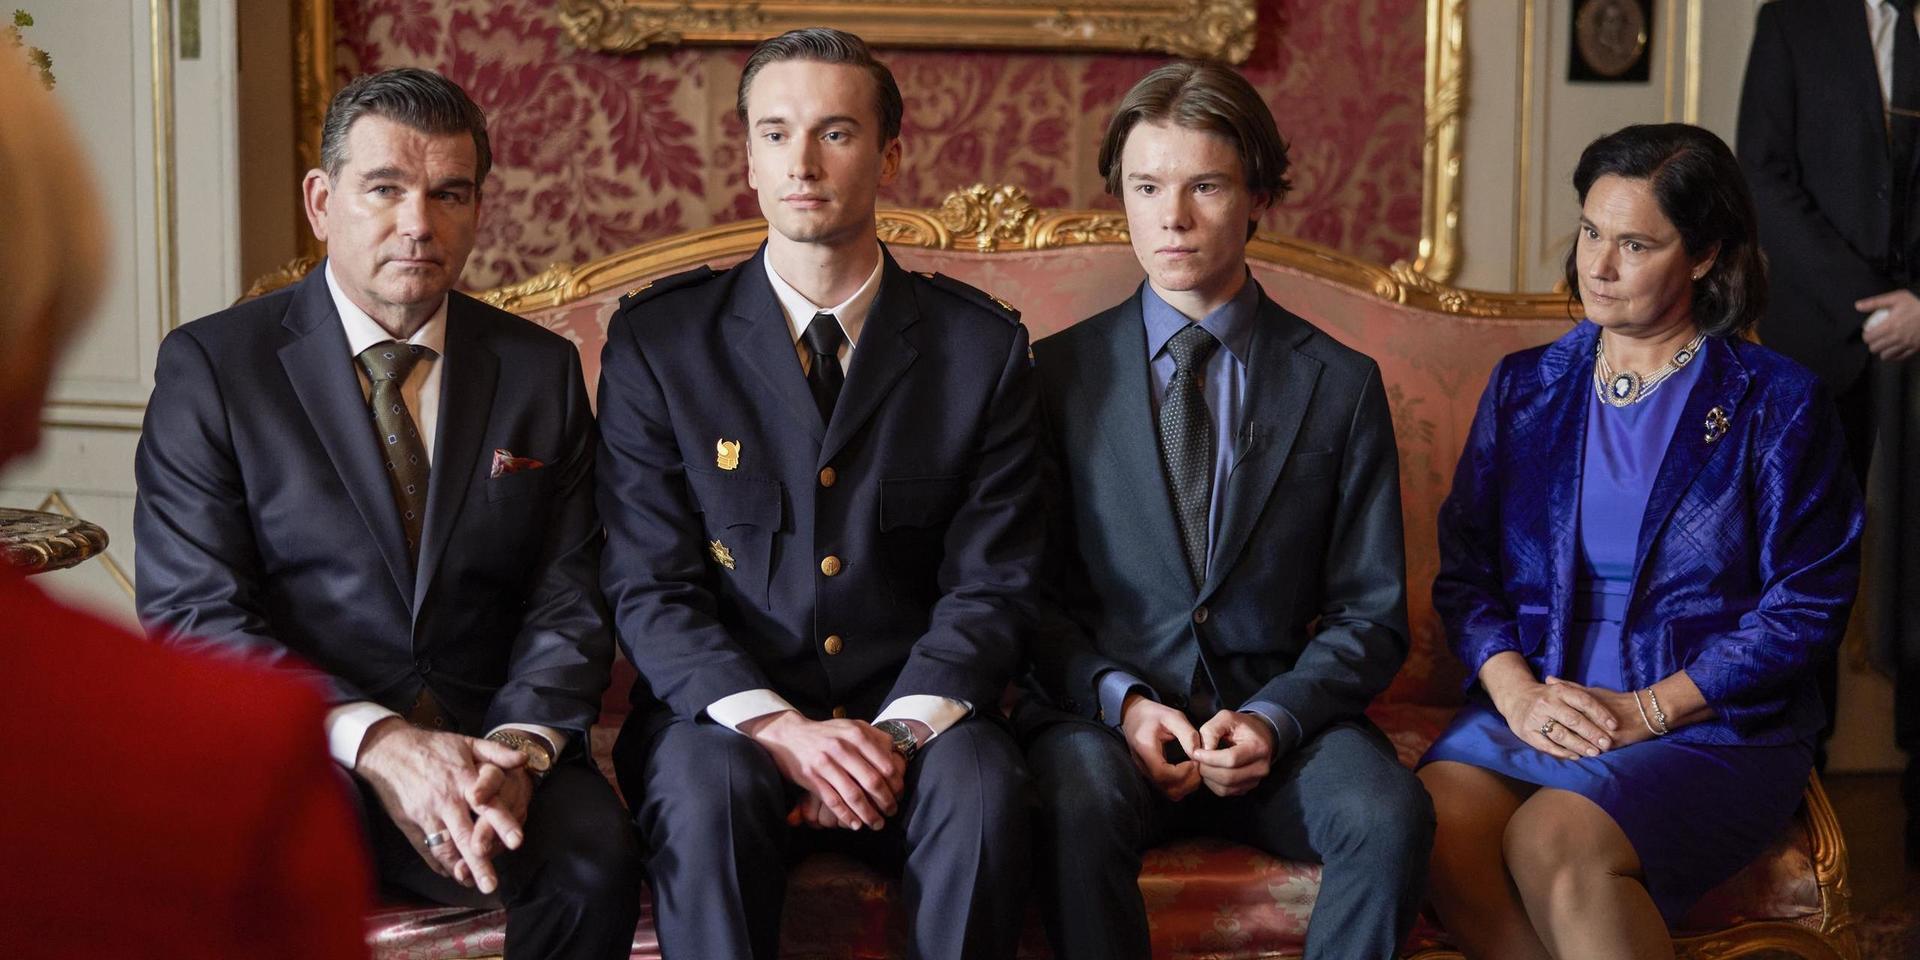 Kungafamiljen i Netflix fiktiva 'Young royals' kontrollerar den unge prinsen Wilhelm hårt. Pressbild.